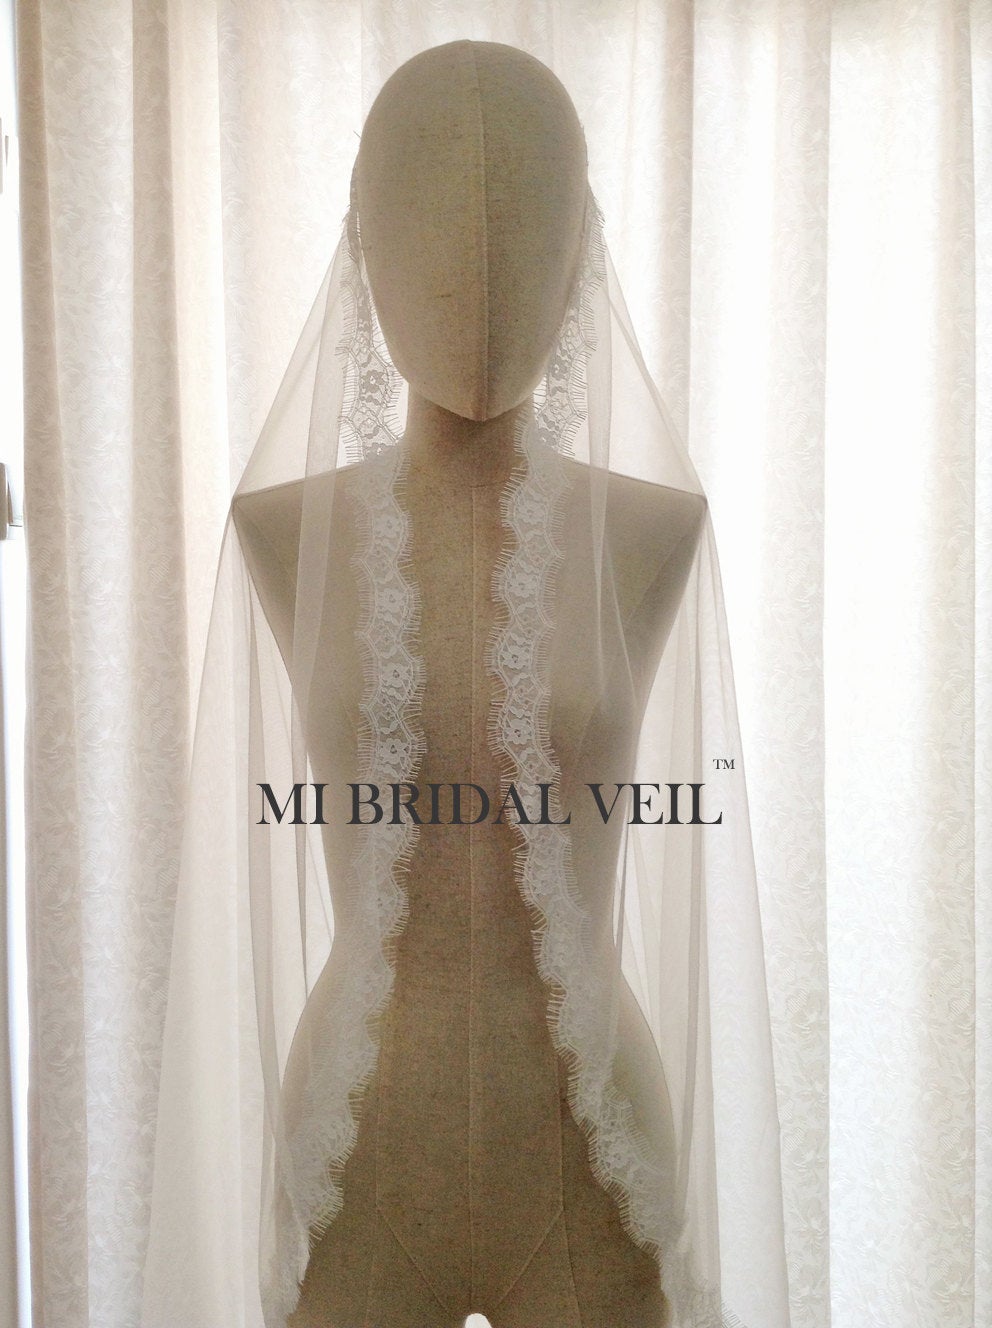 Cathedral Wedding Veil, Small Eyelash Chantilly Boho Lace Veil, Mi Bridal